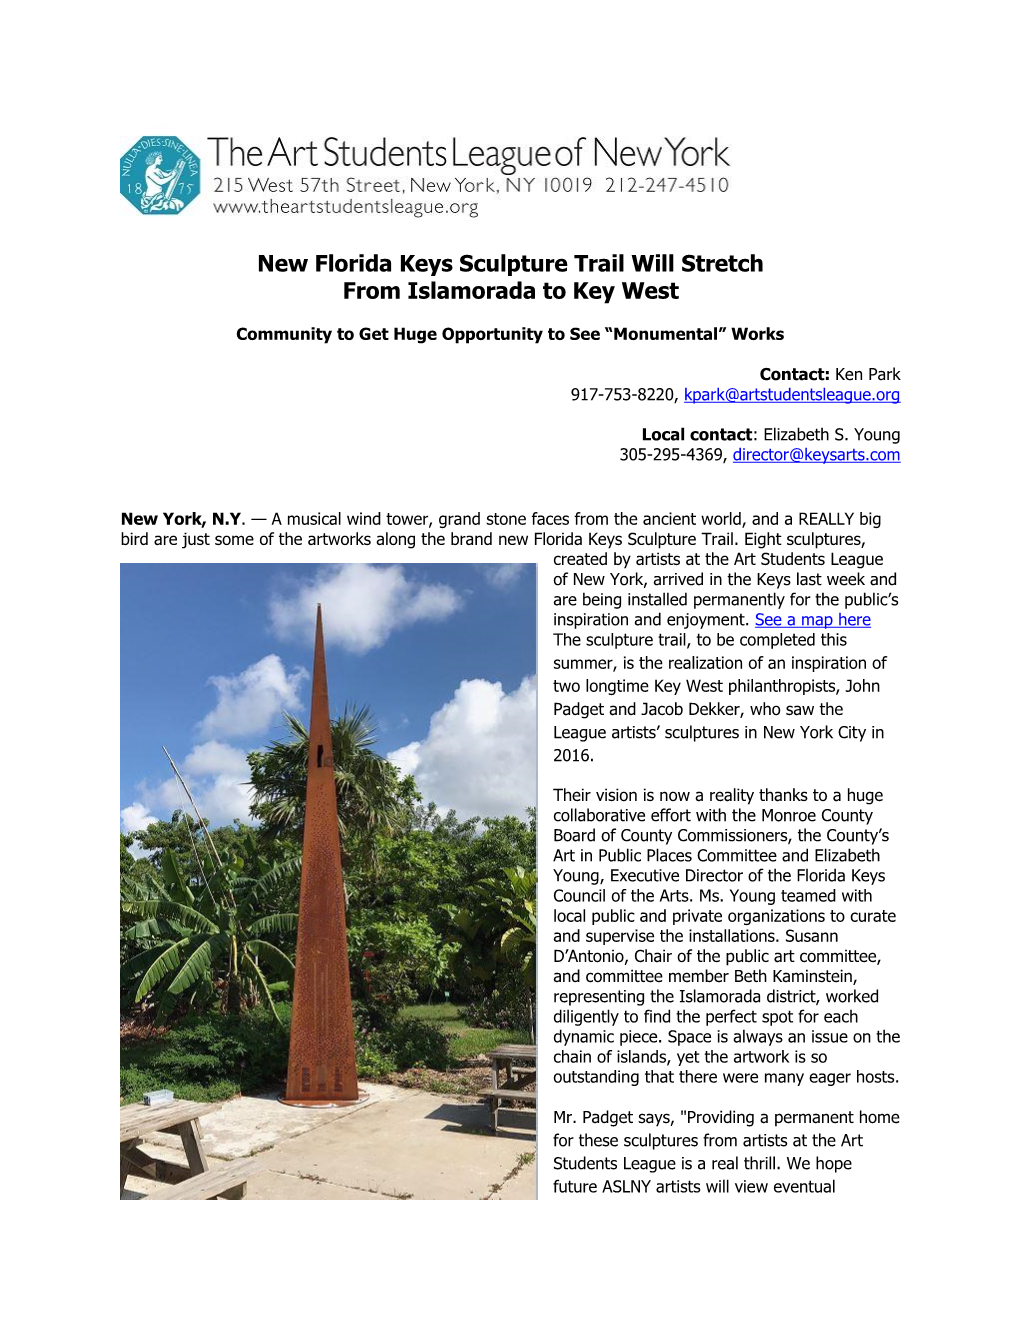 New Florida Keys Sculpture Trail Will Stretch from Islamorada to Key West